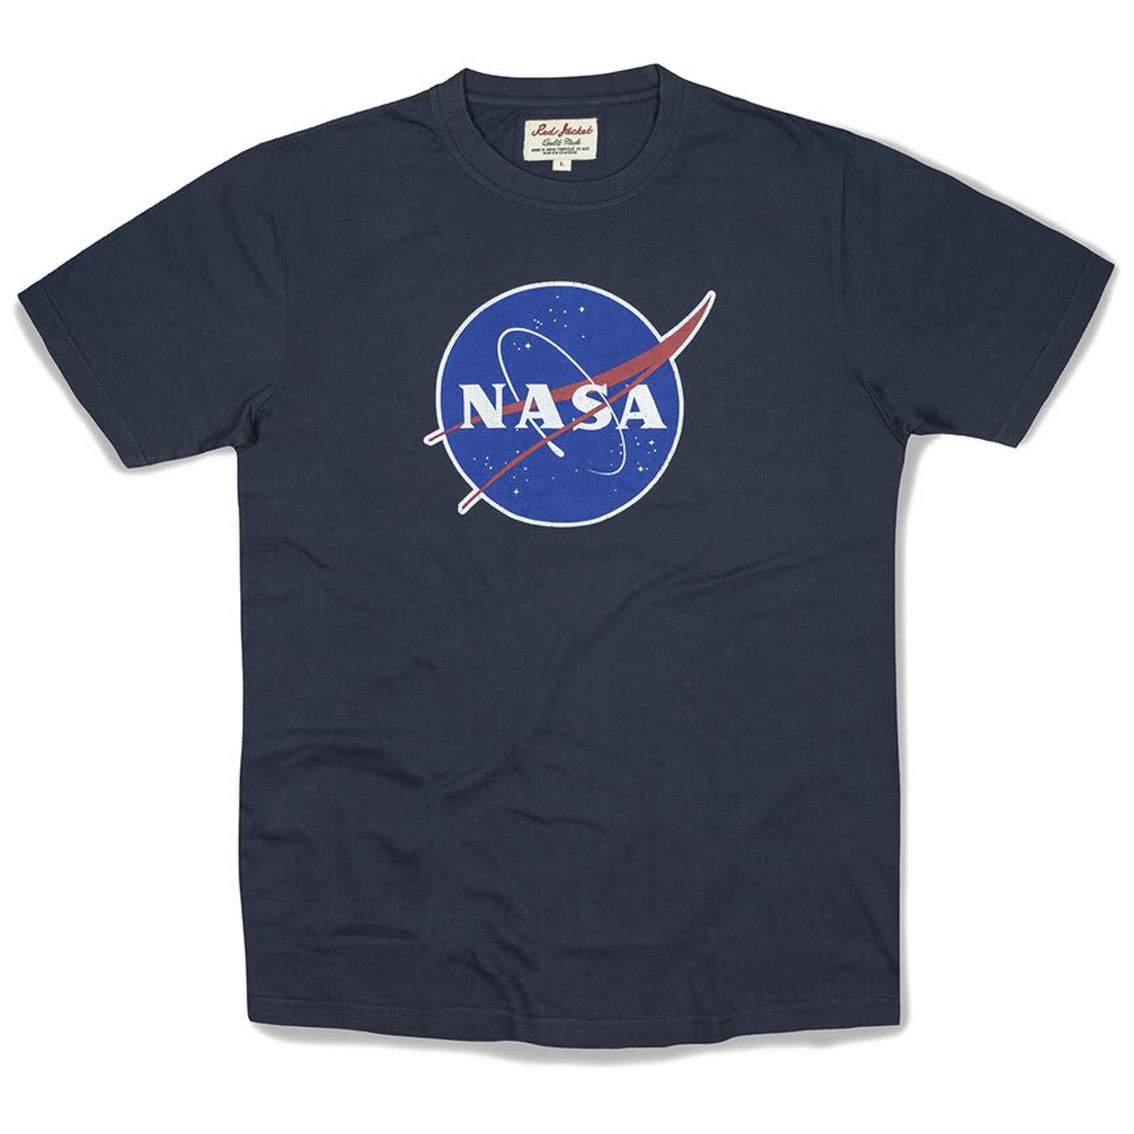 American Needle T-Shirt - Image 2 of 2